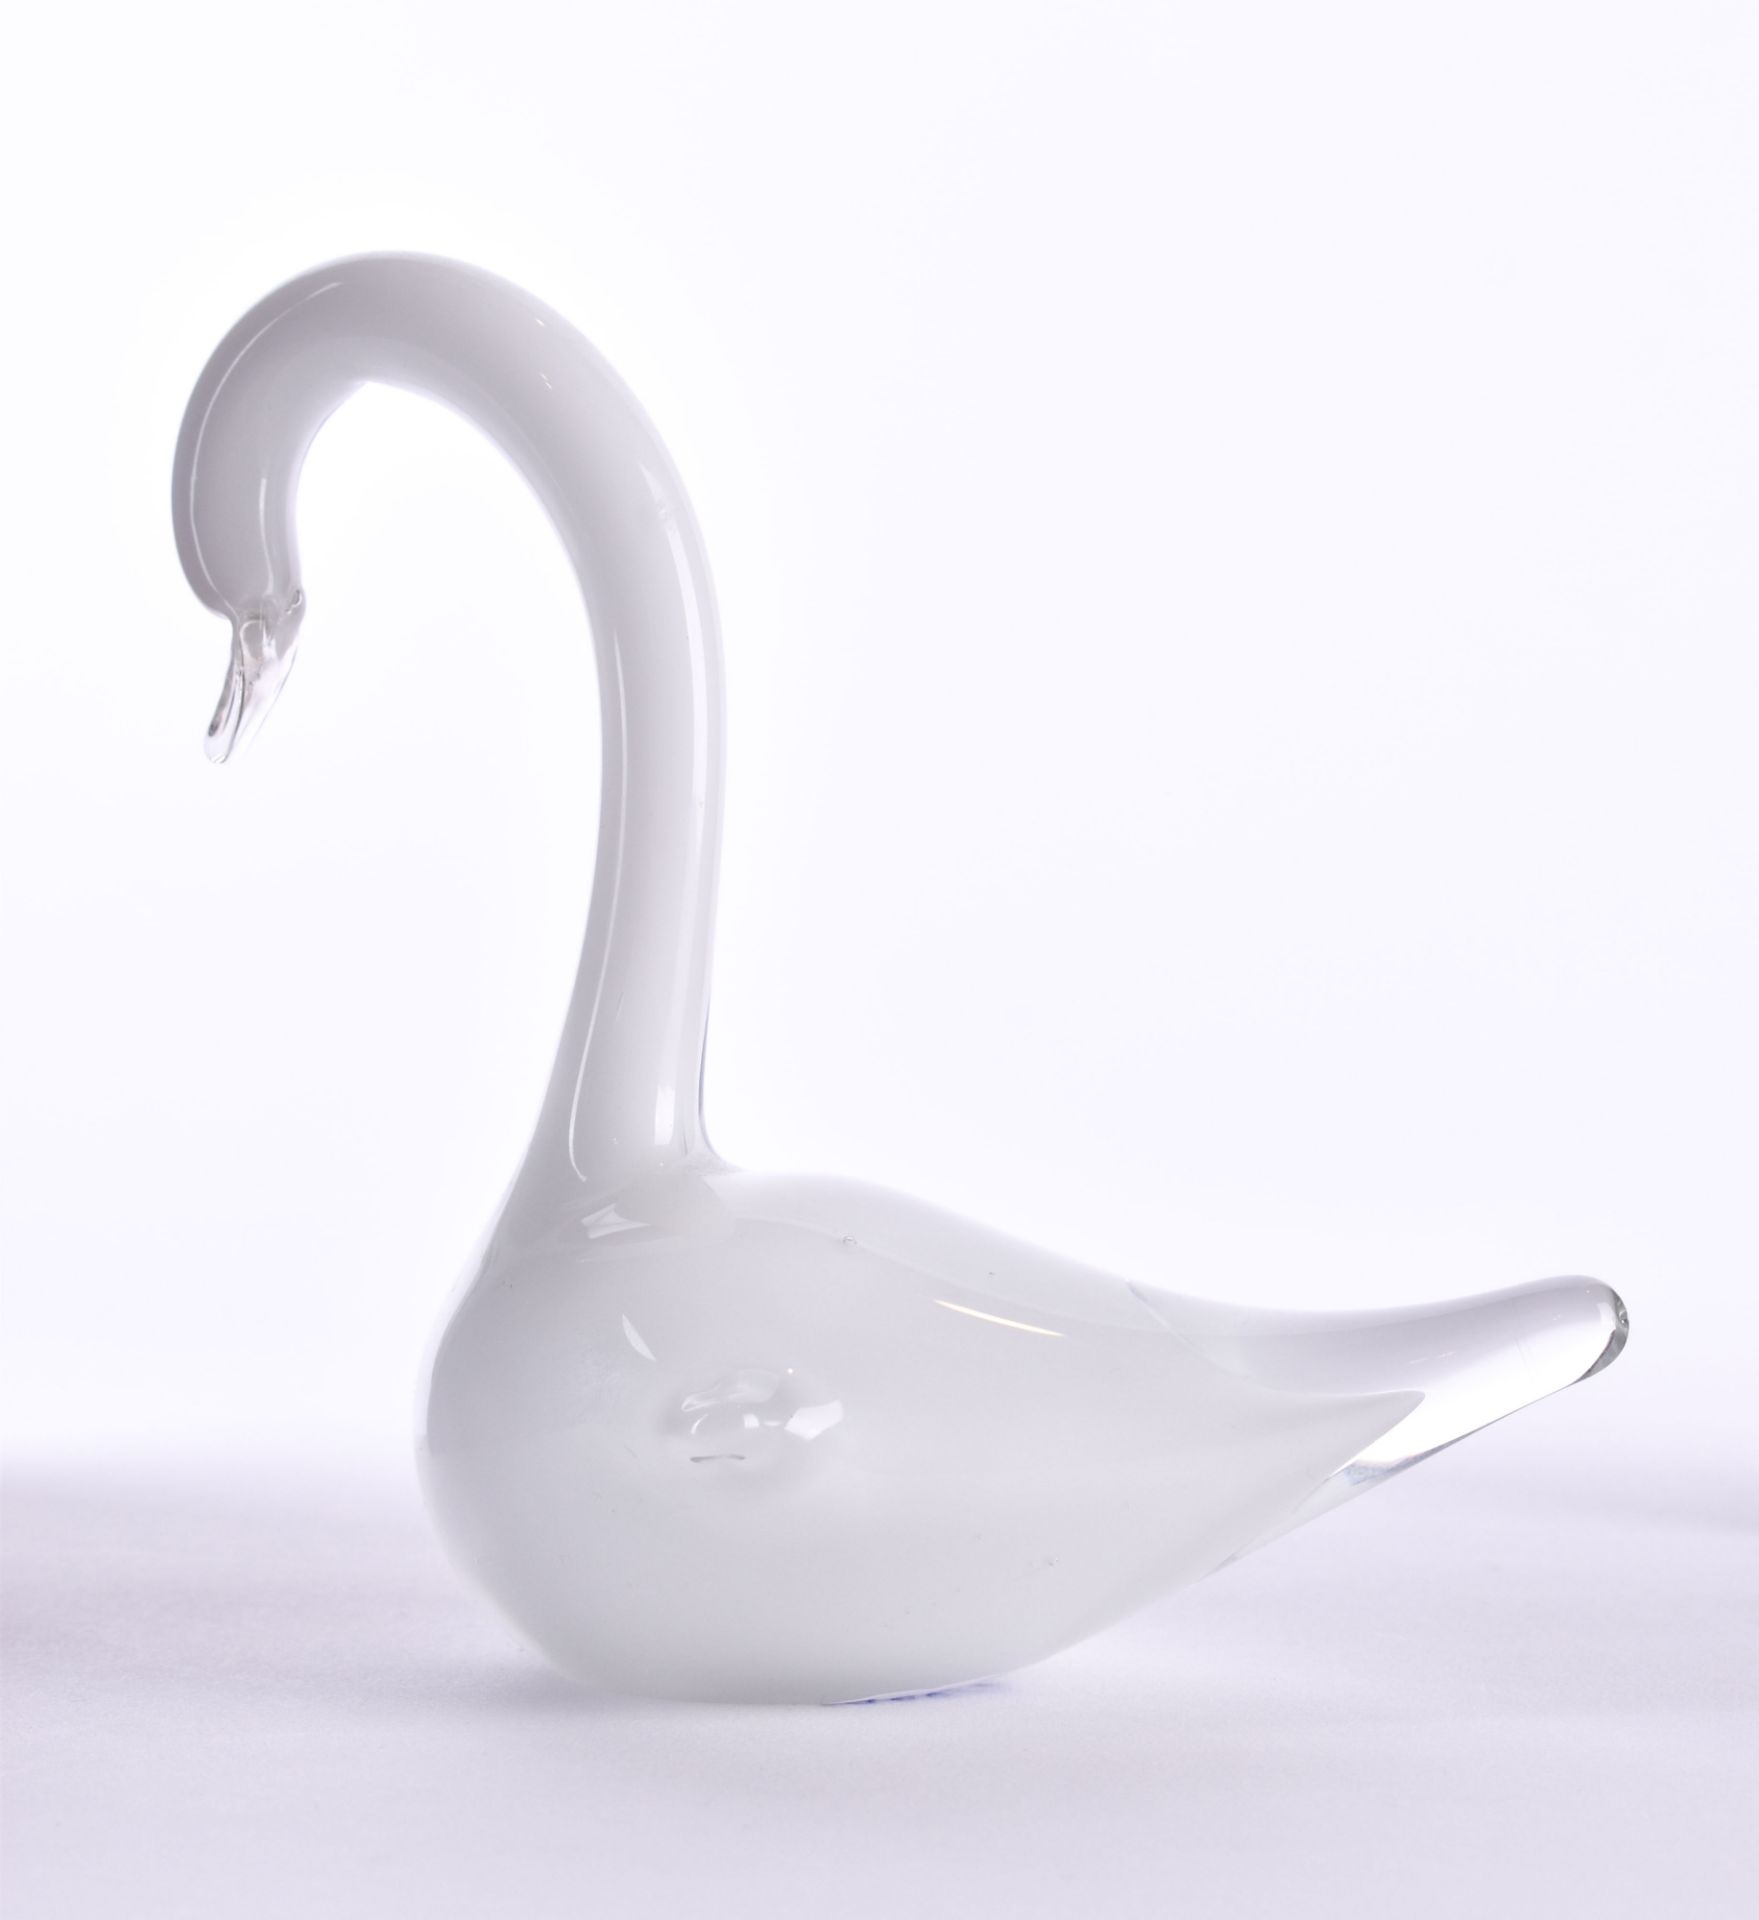 Swan figurine